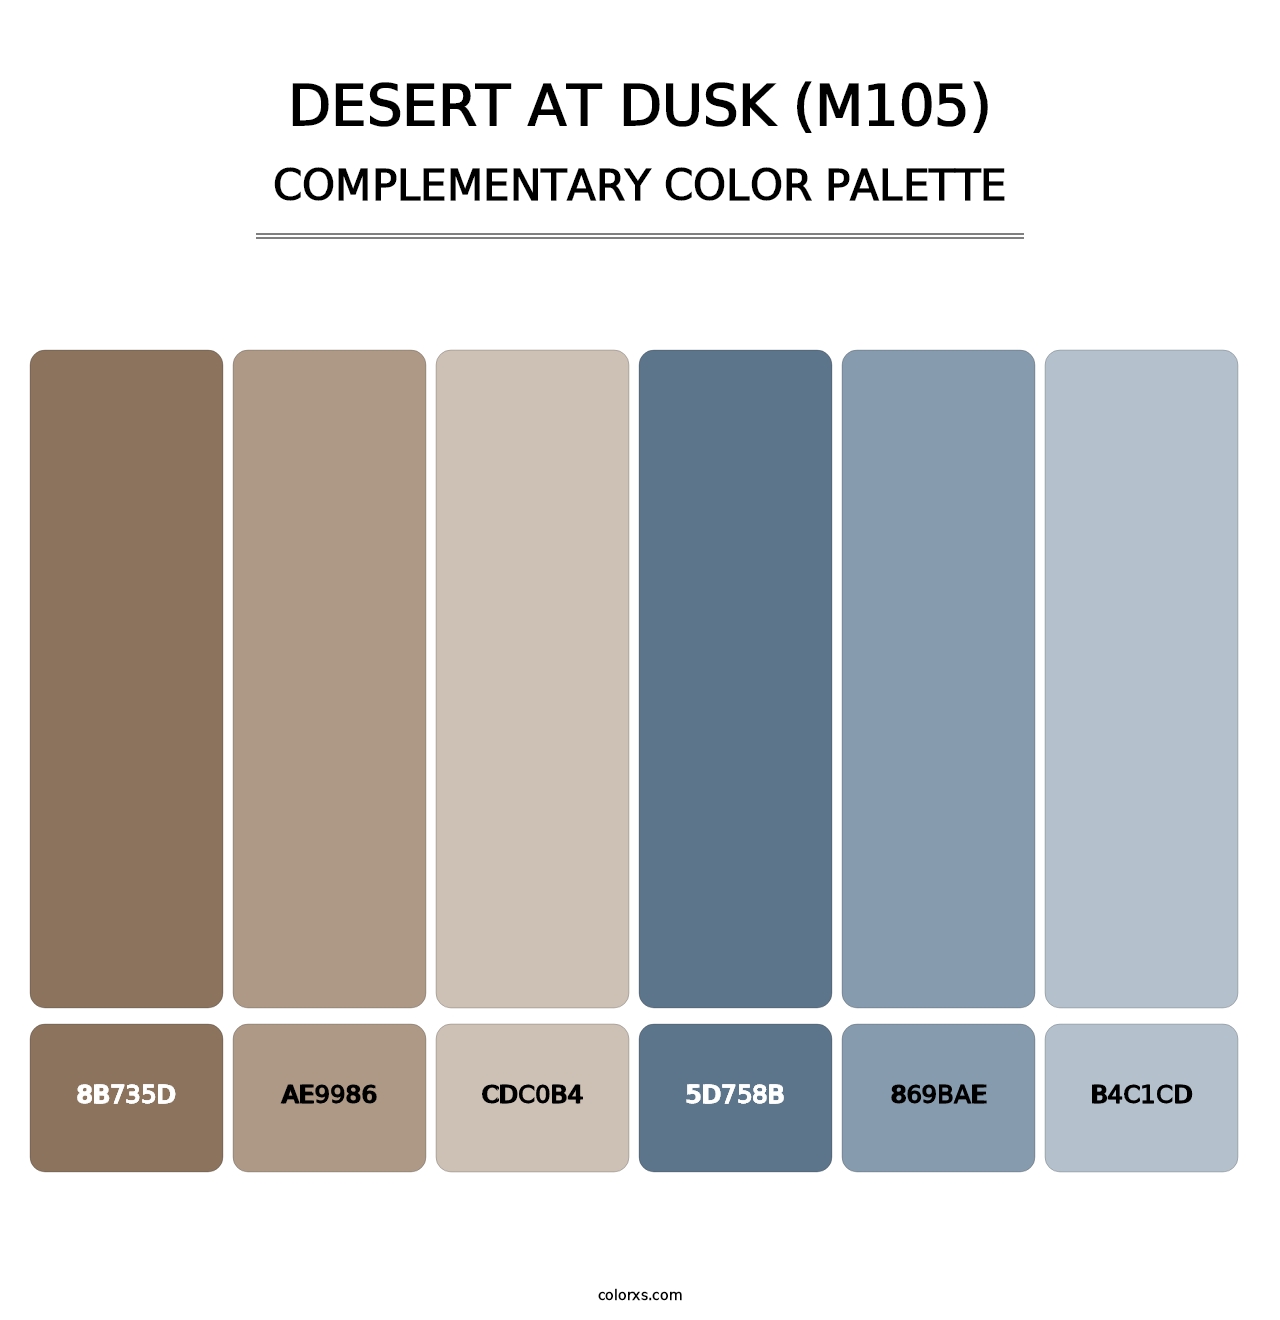 Desert at Dusk (M105) - Complementary Color Palette